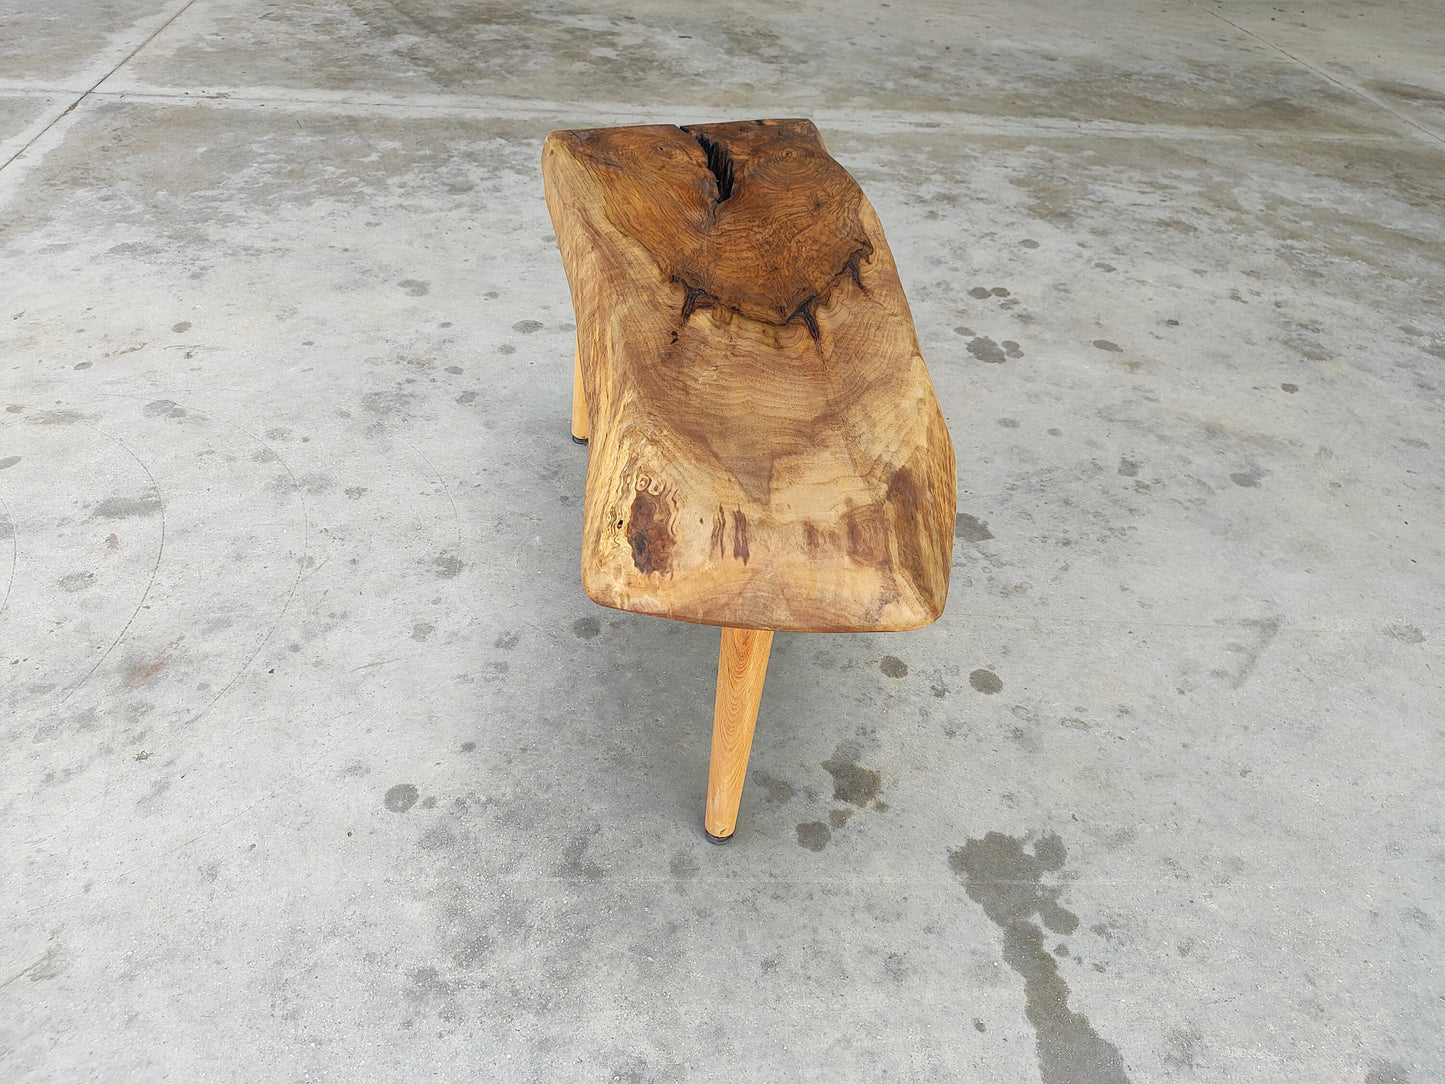 Rustic Handmade Wood Coffee Table - Unique Walnut (WG-1094)